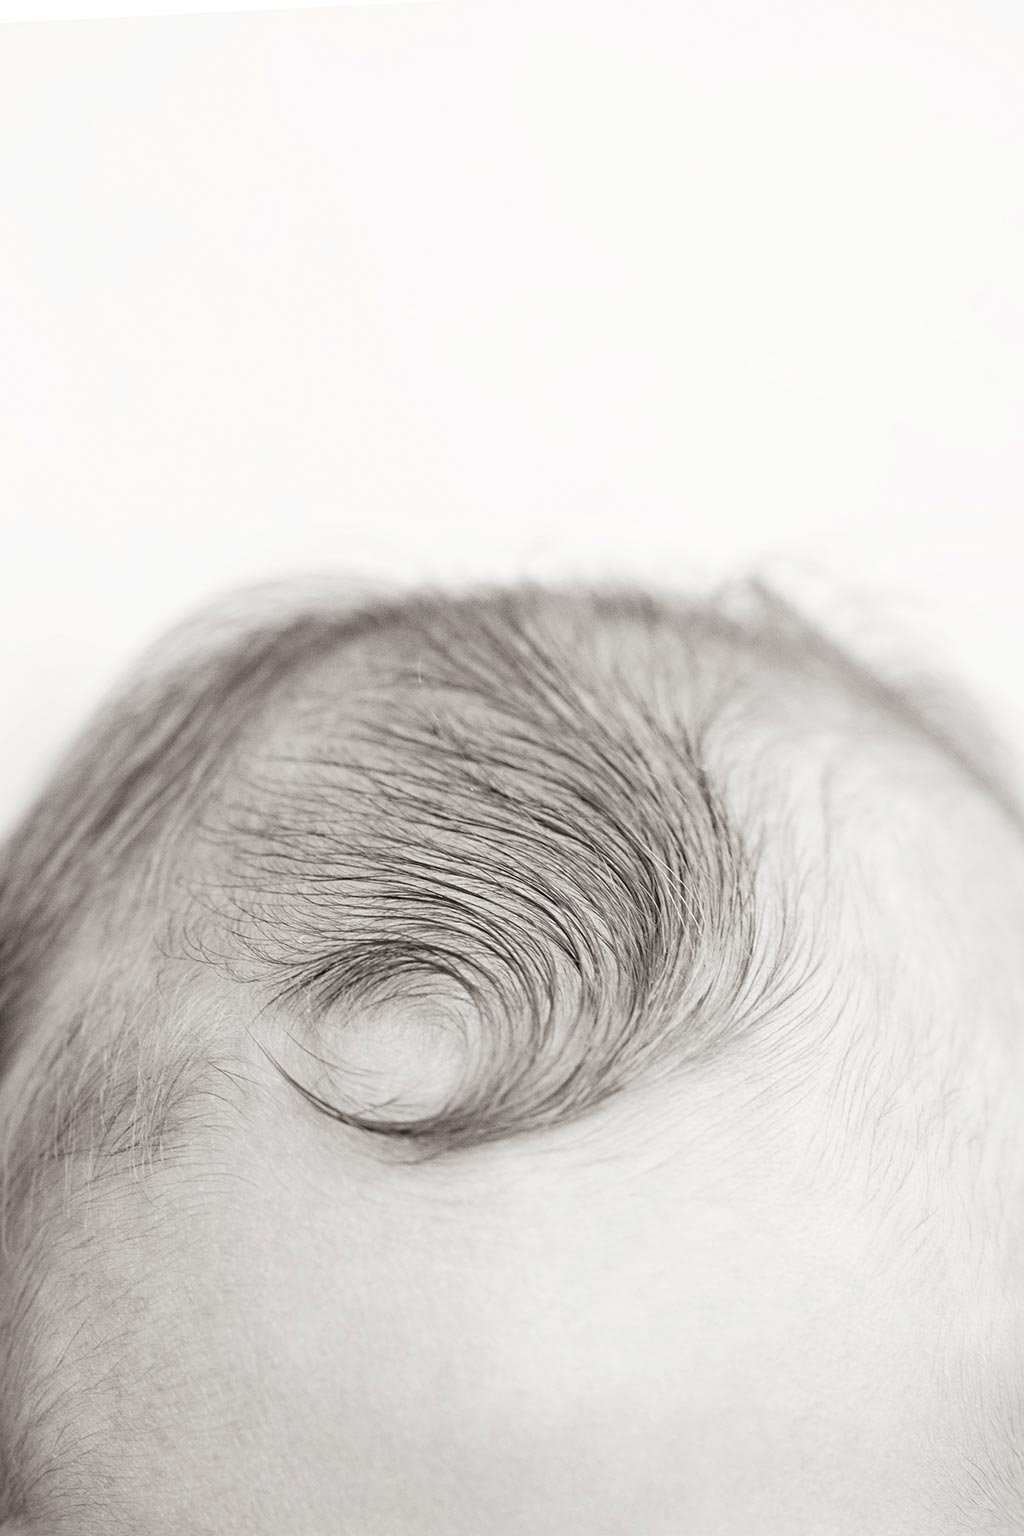 Photo of a newborn's swirl of hair.